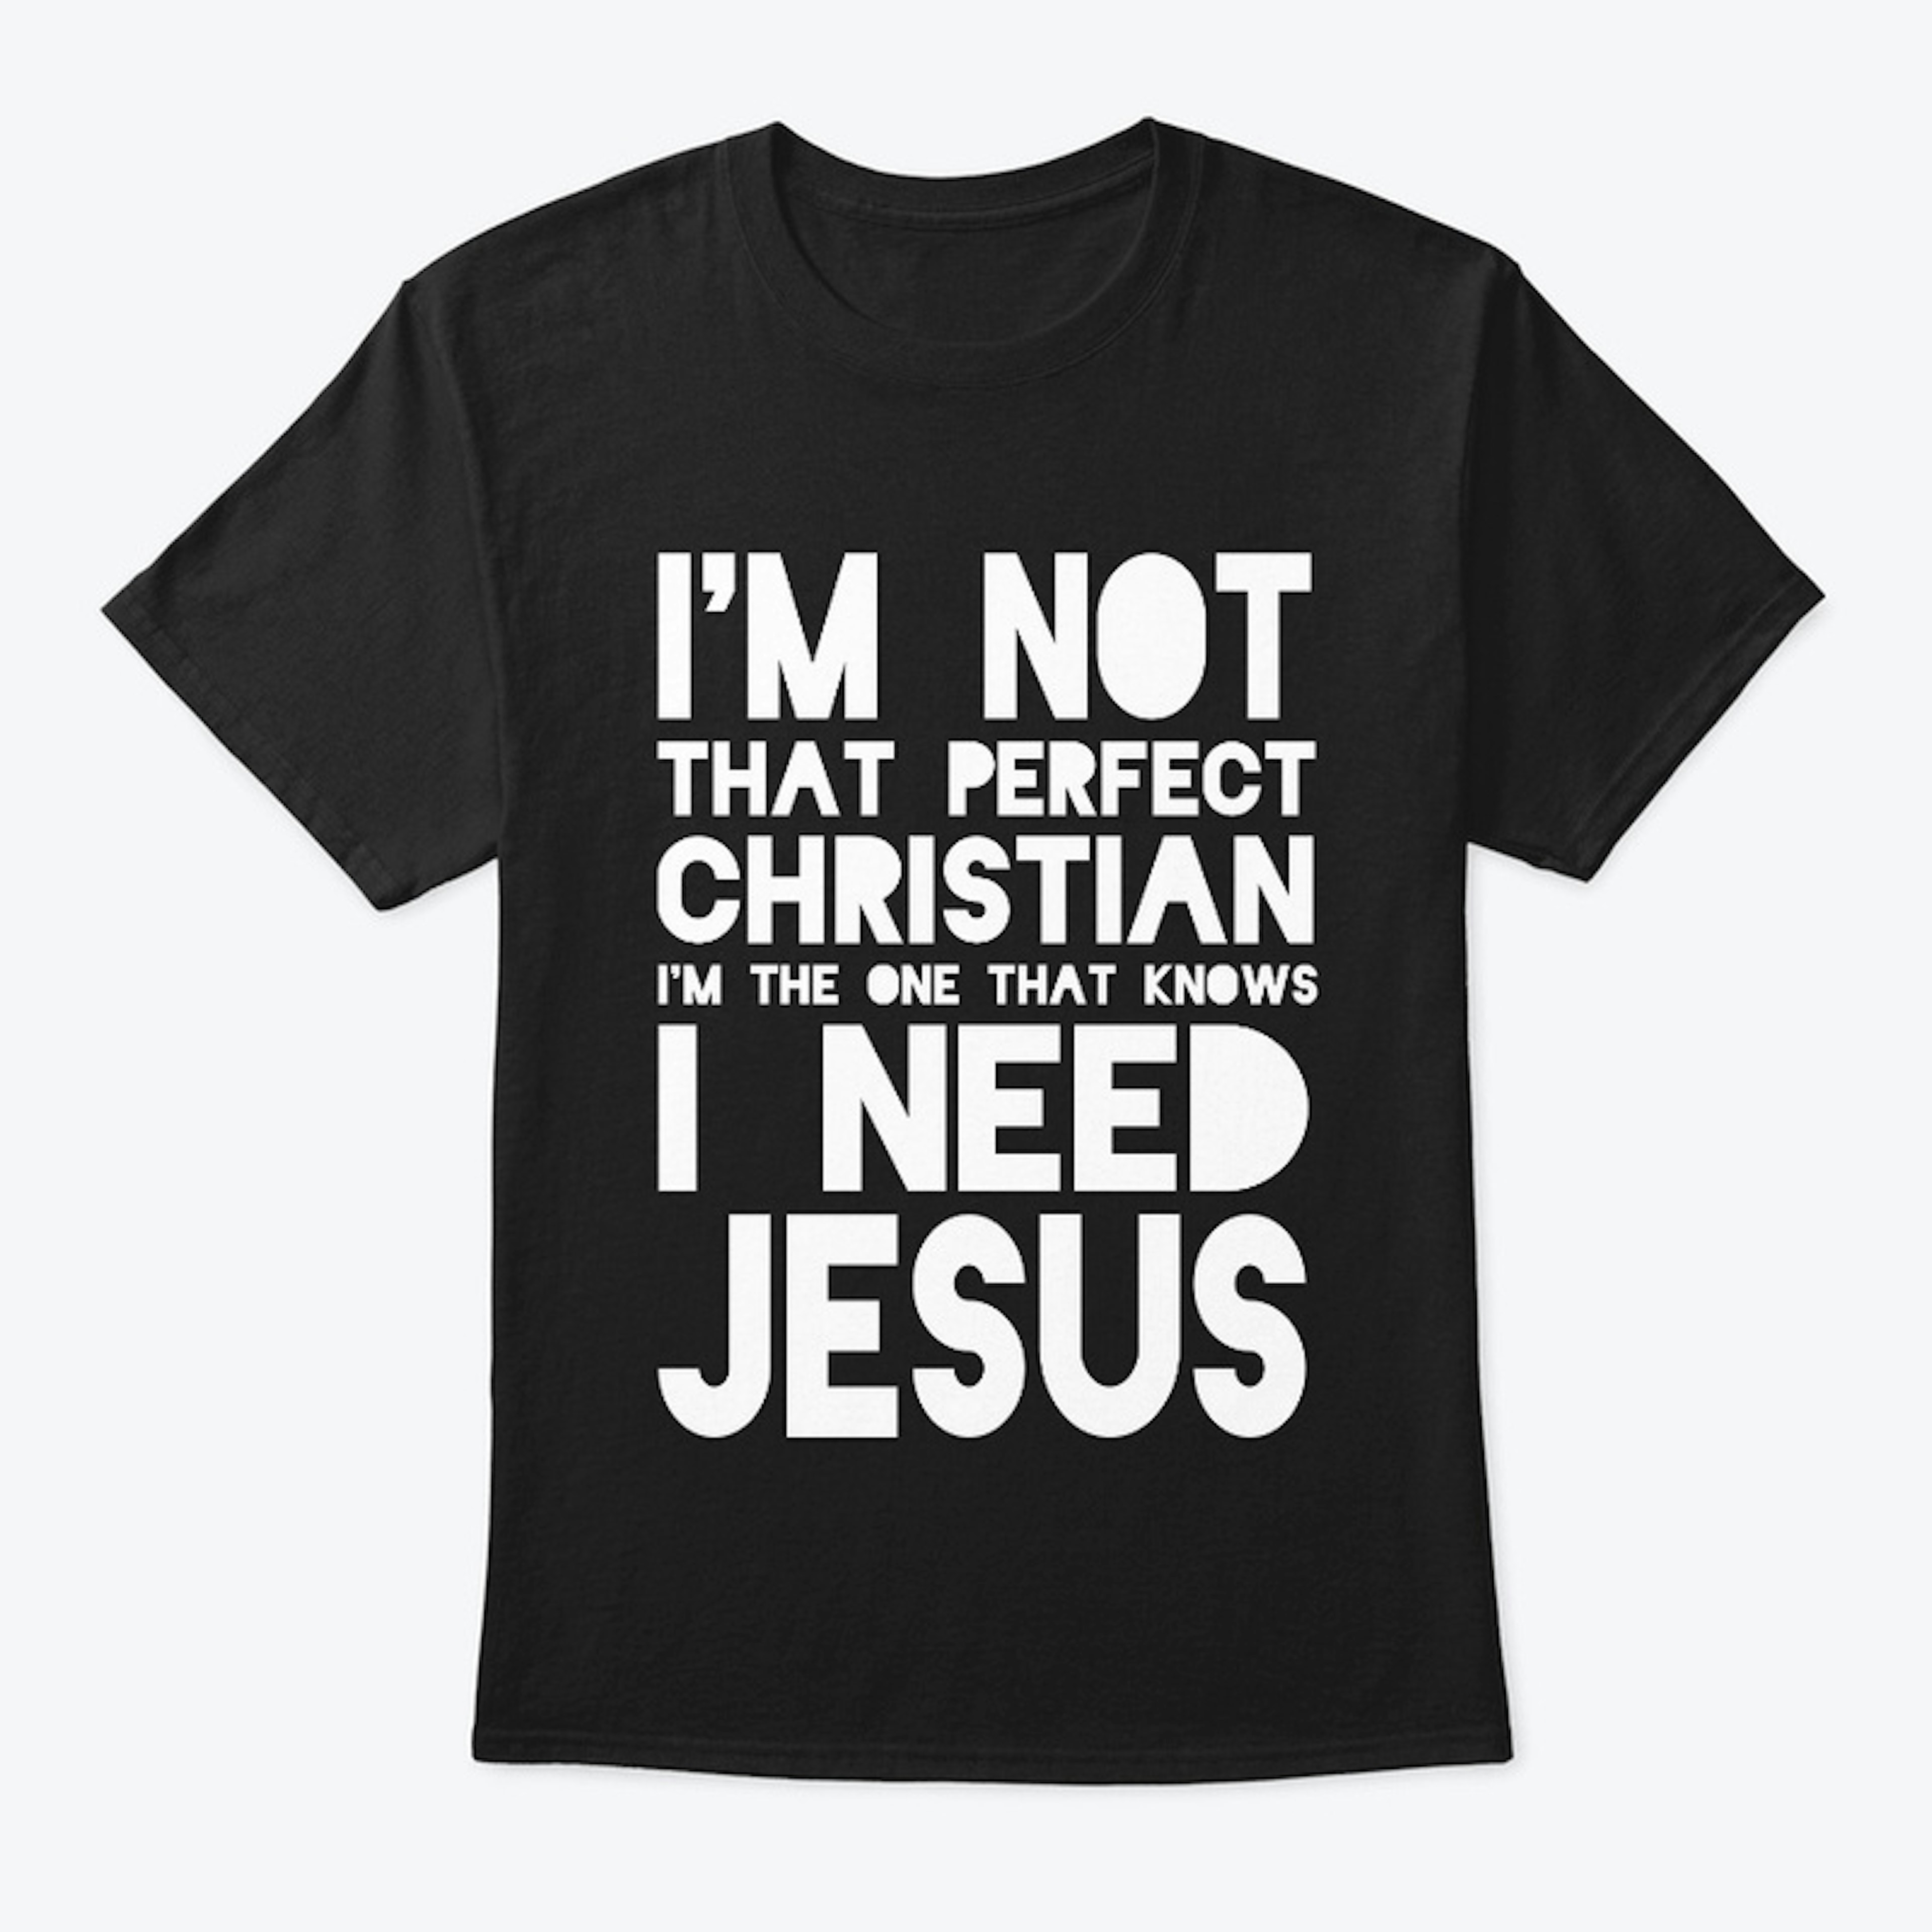 I NEED JESUS shirt!